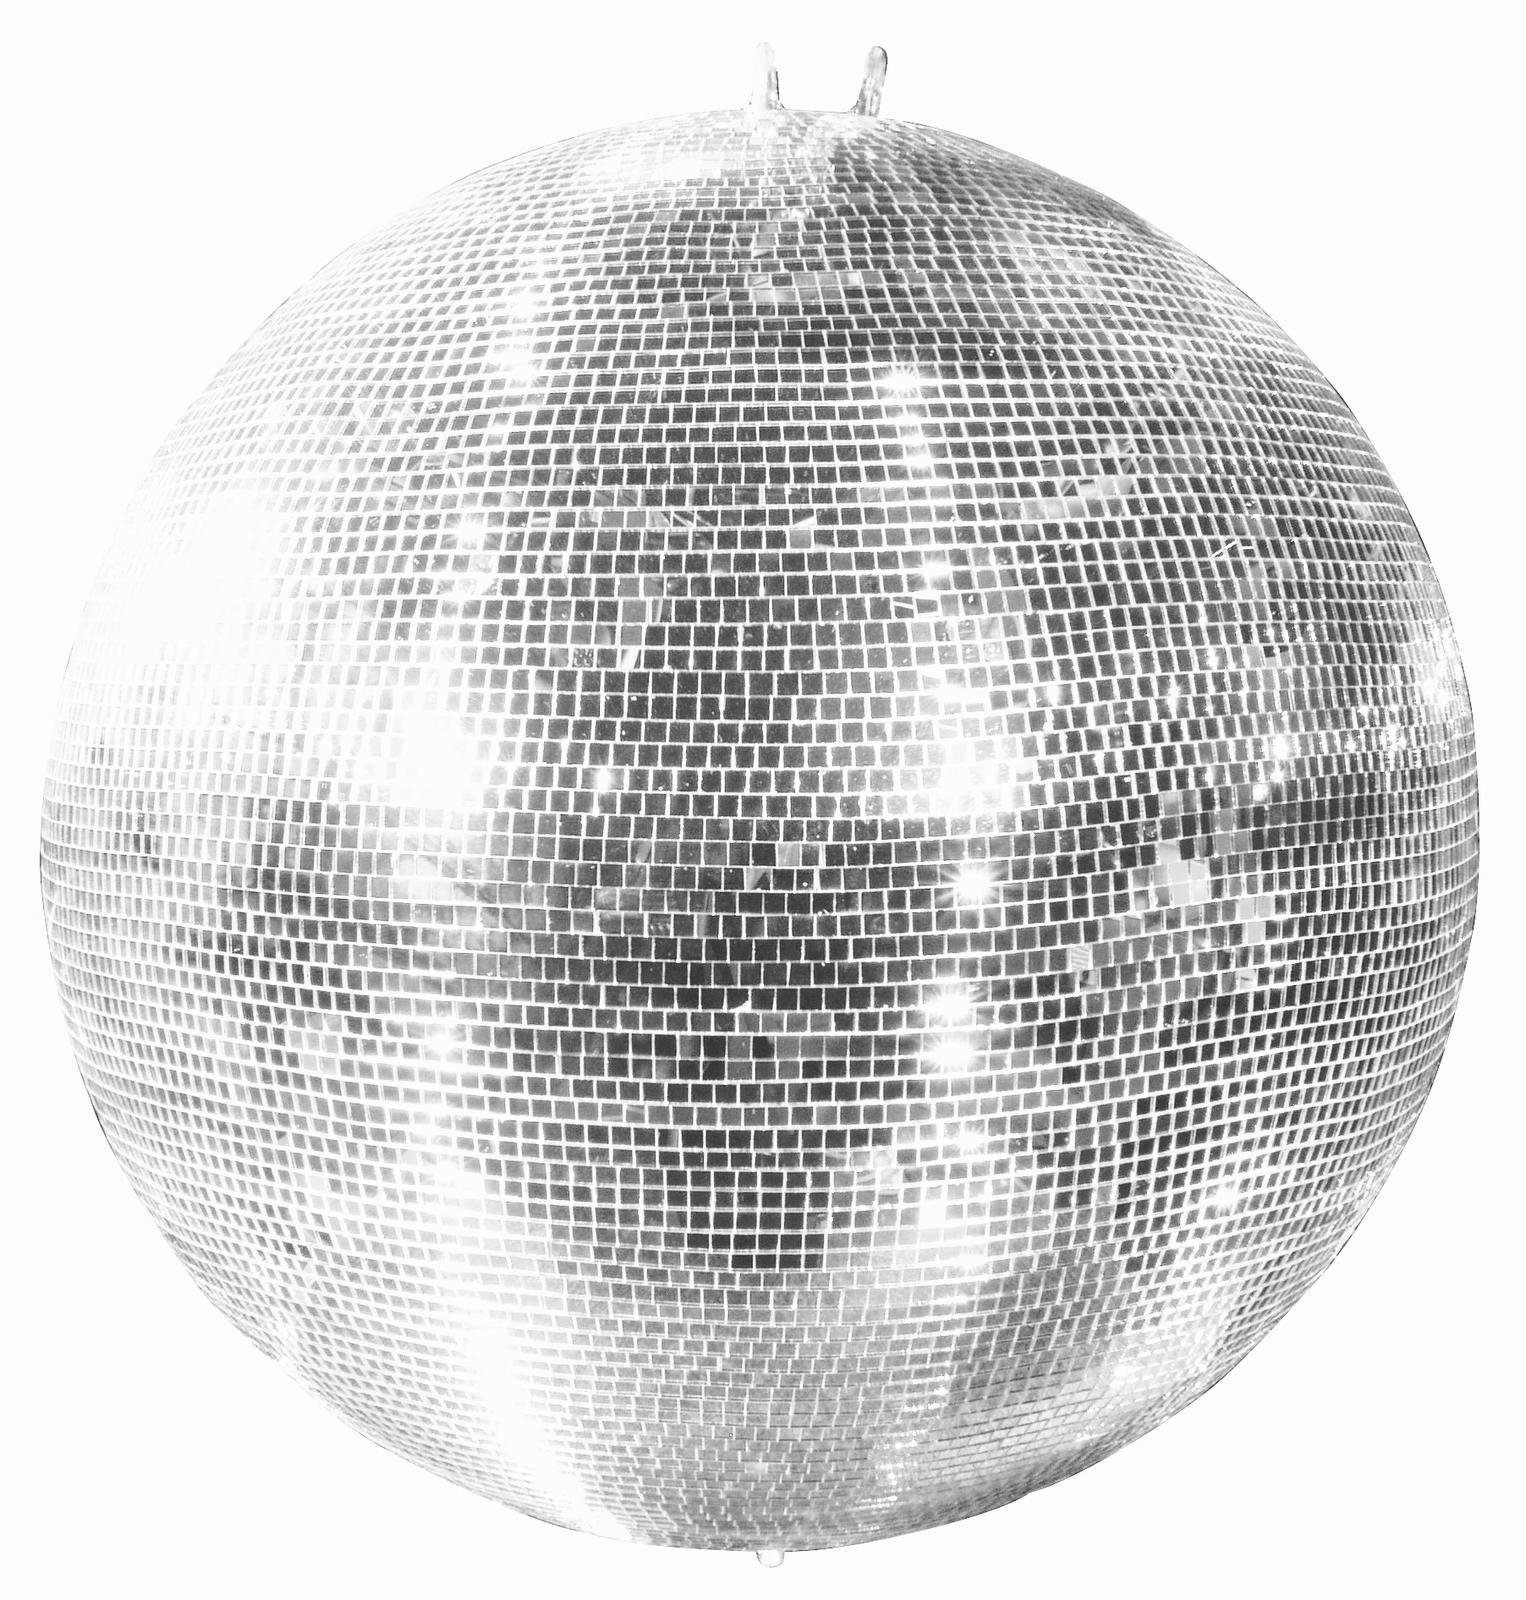 Spiegelkugel 150cm silber chrom- Diskokugel (Discokugel) Party Lichteffekt - Echtglas - mirrorball safety silver chrome color 2